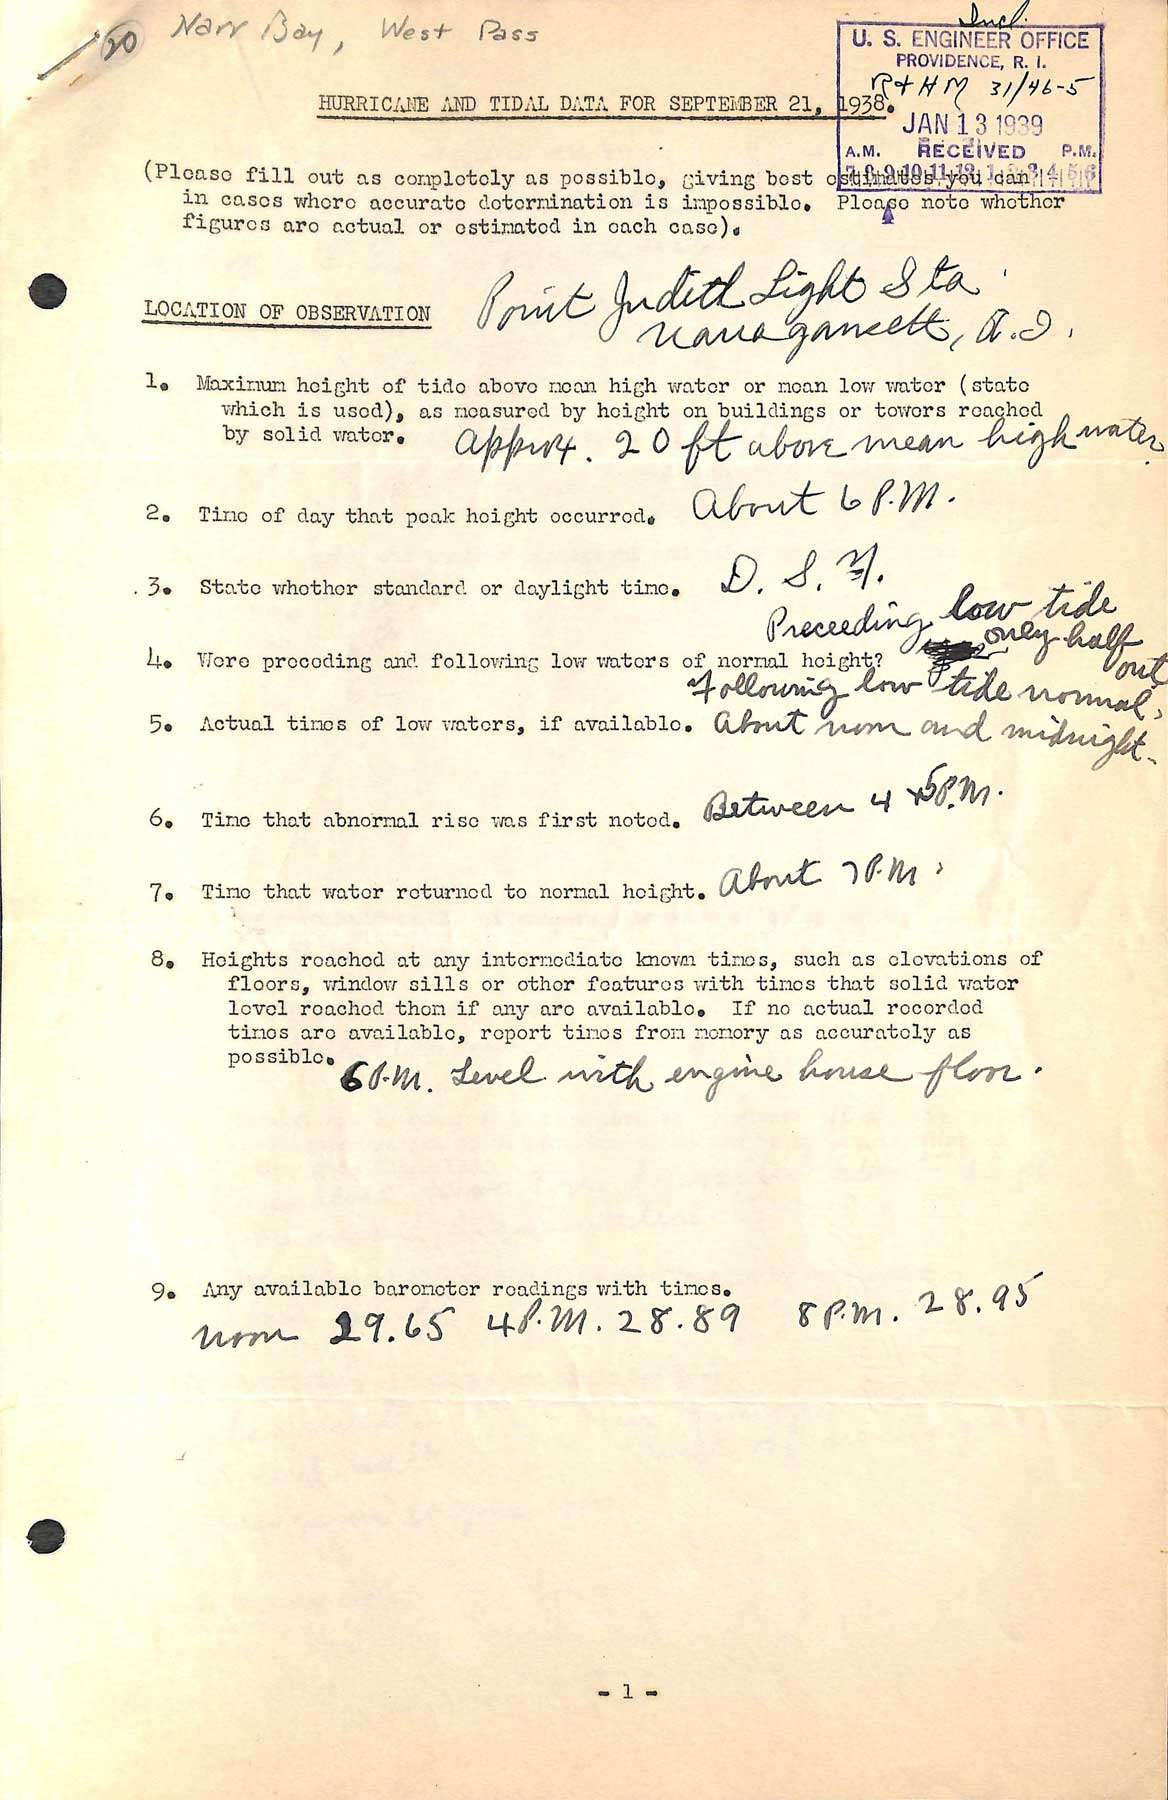 Point Judith Light - A questionnaire regarding the hurricane of September 21, 1938